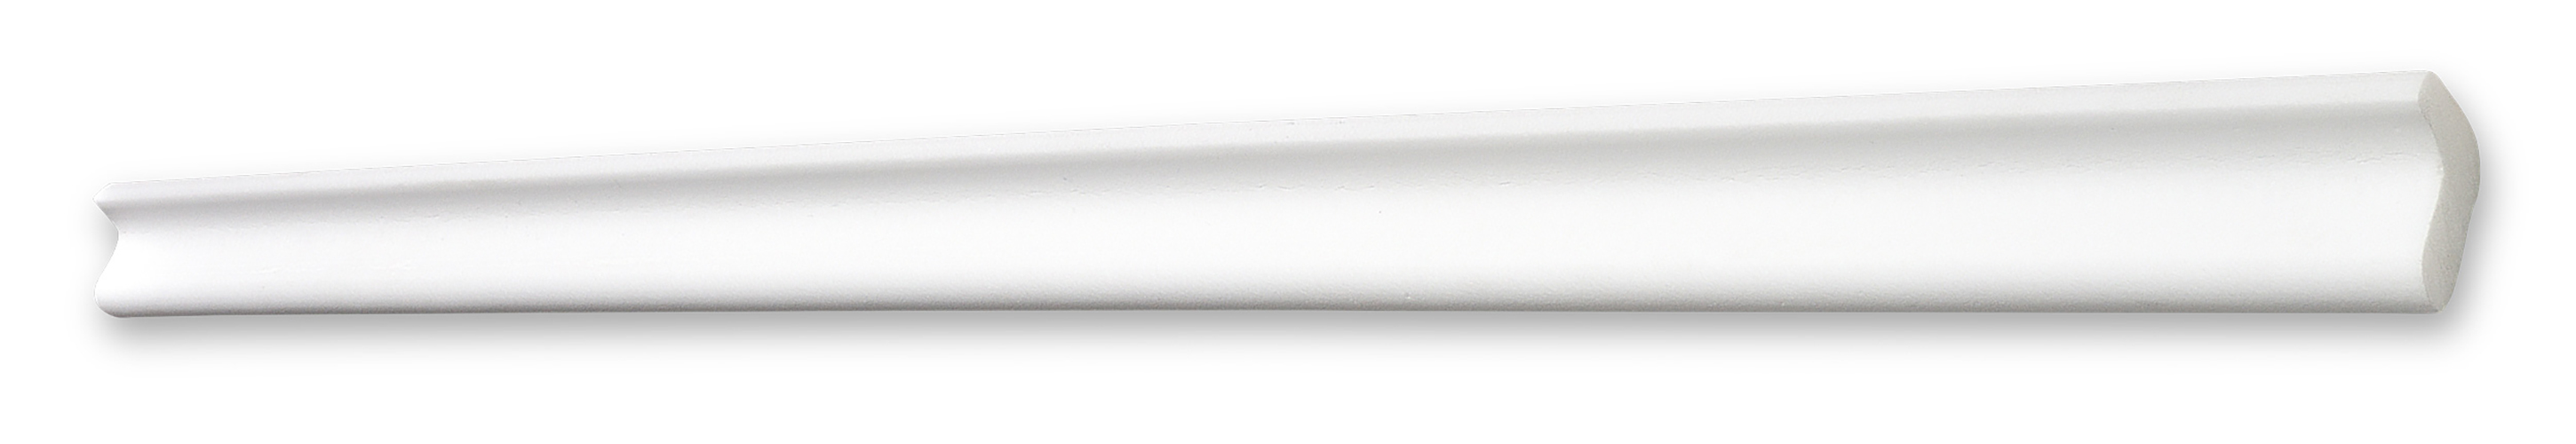 DECOSA Moulure L25 - polystyrène - blanc - 20 x 25 mm - longueur 2 m